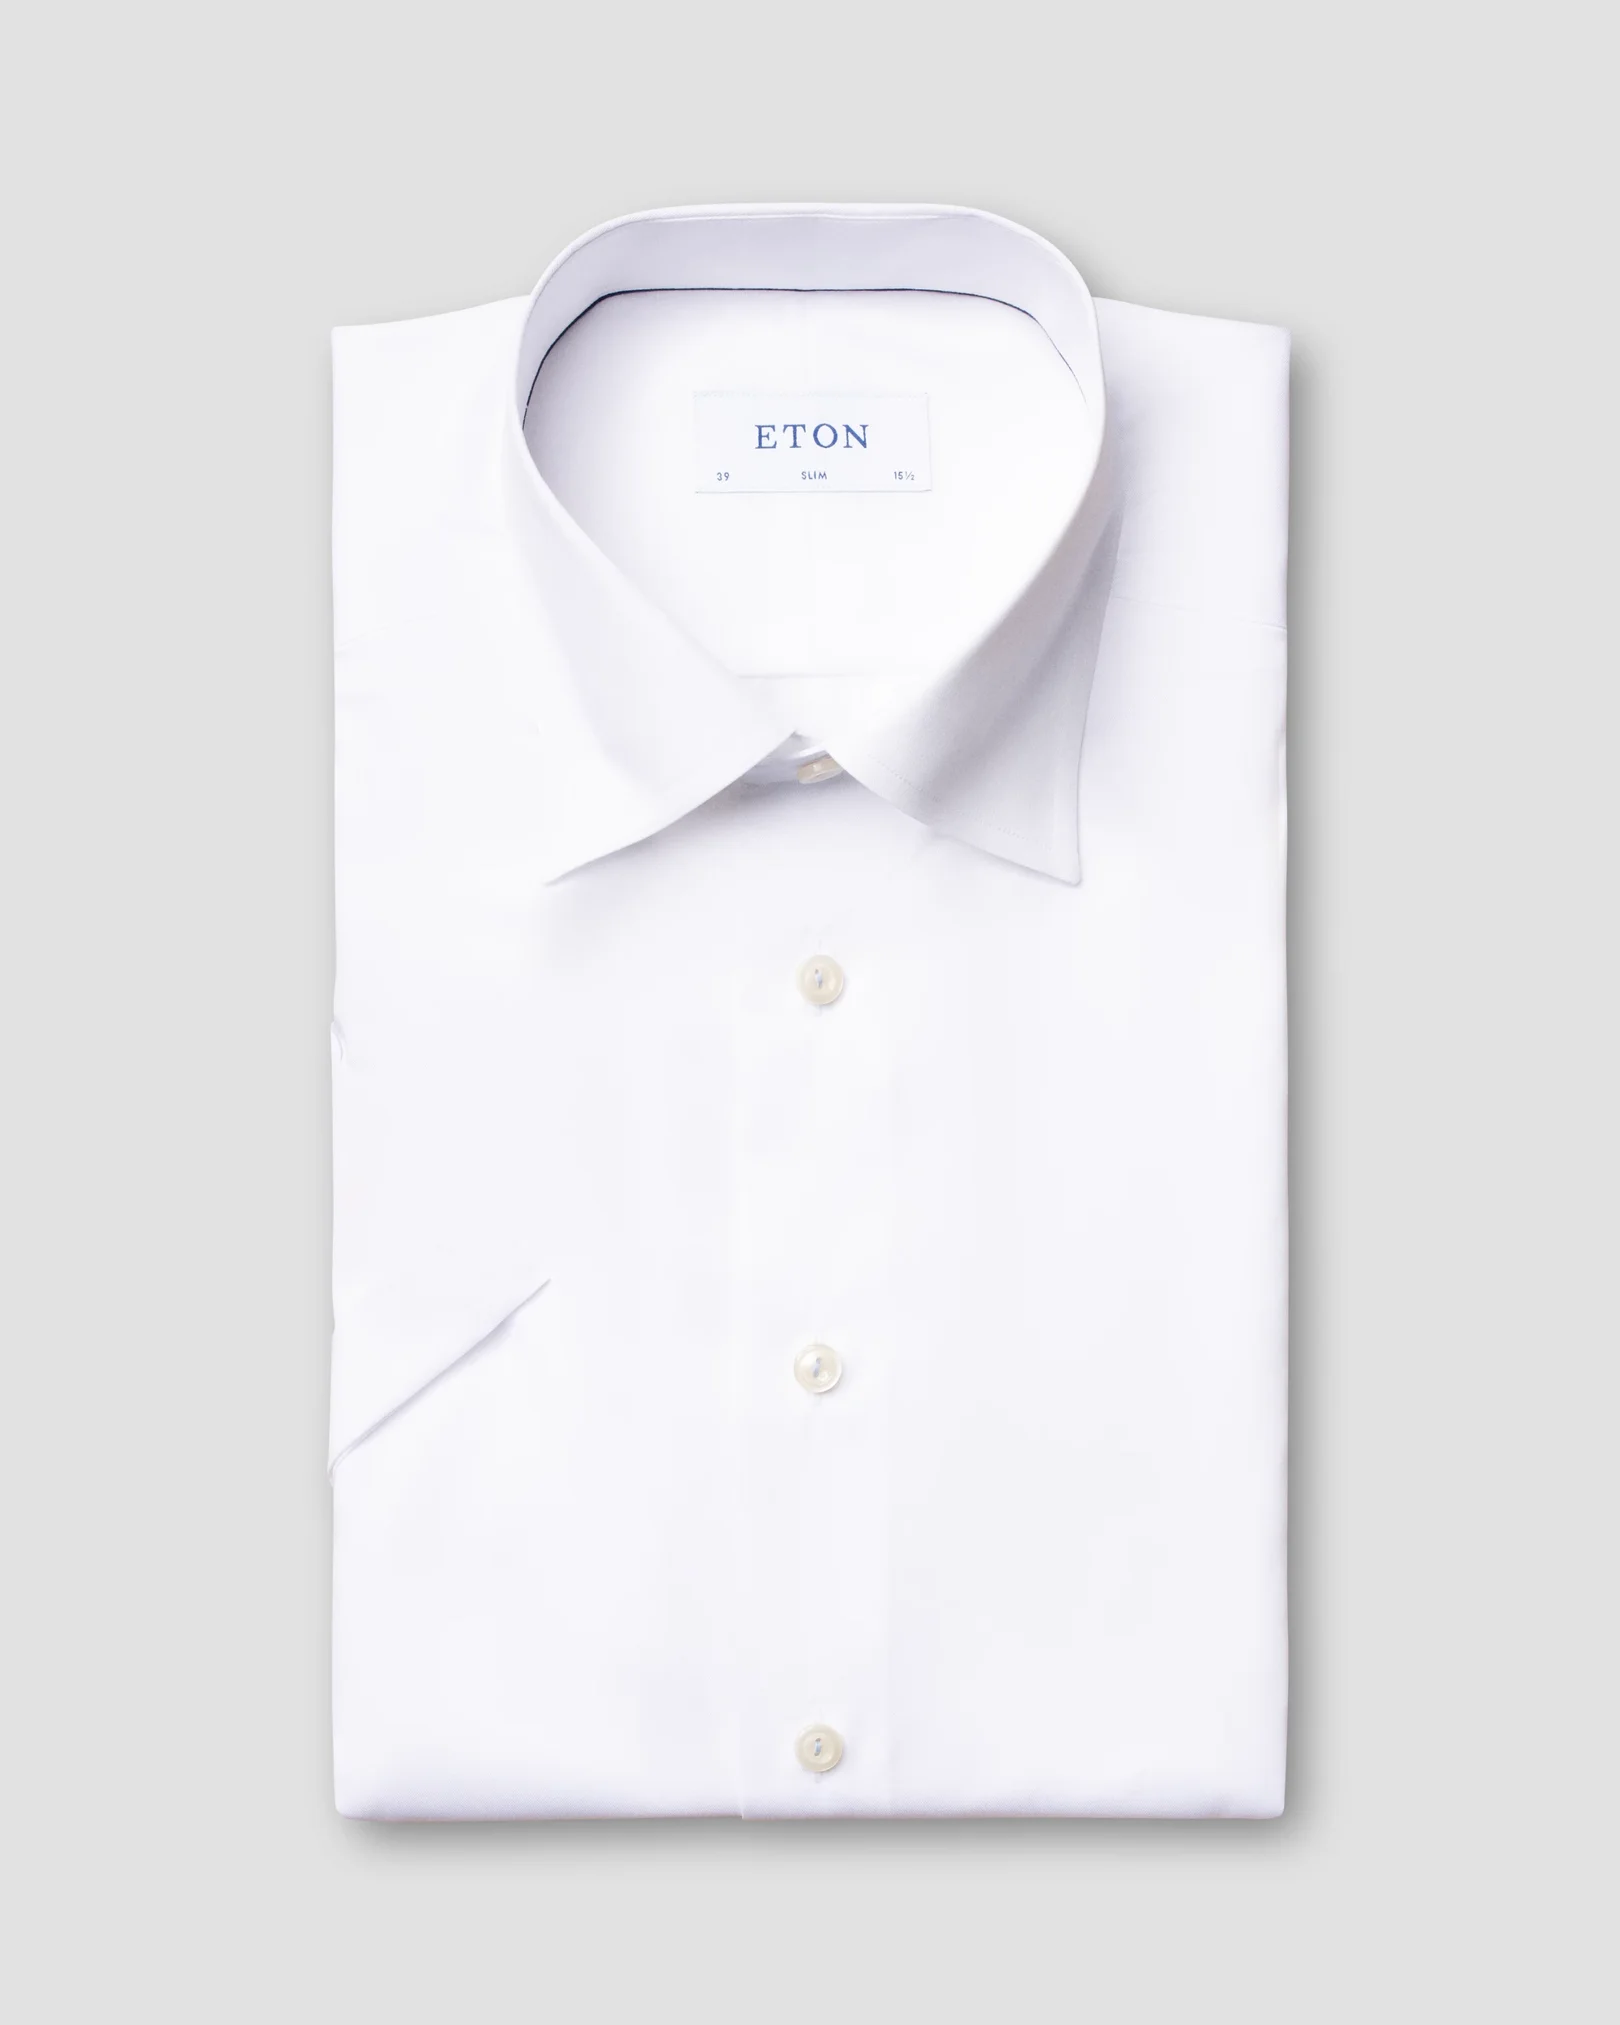 Eton - white fine twill shirt short sleeved